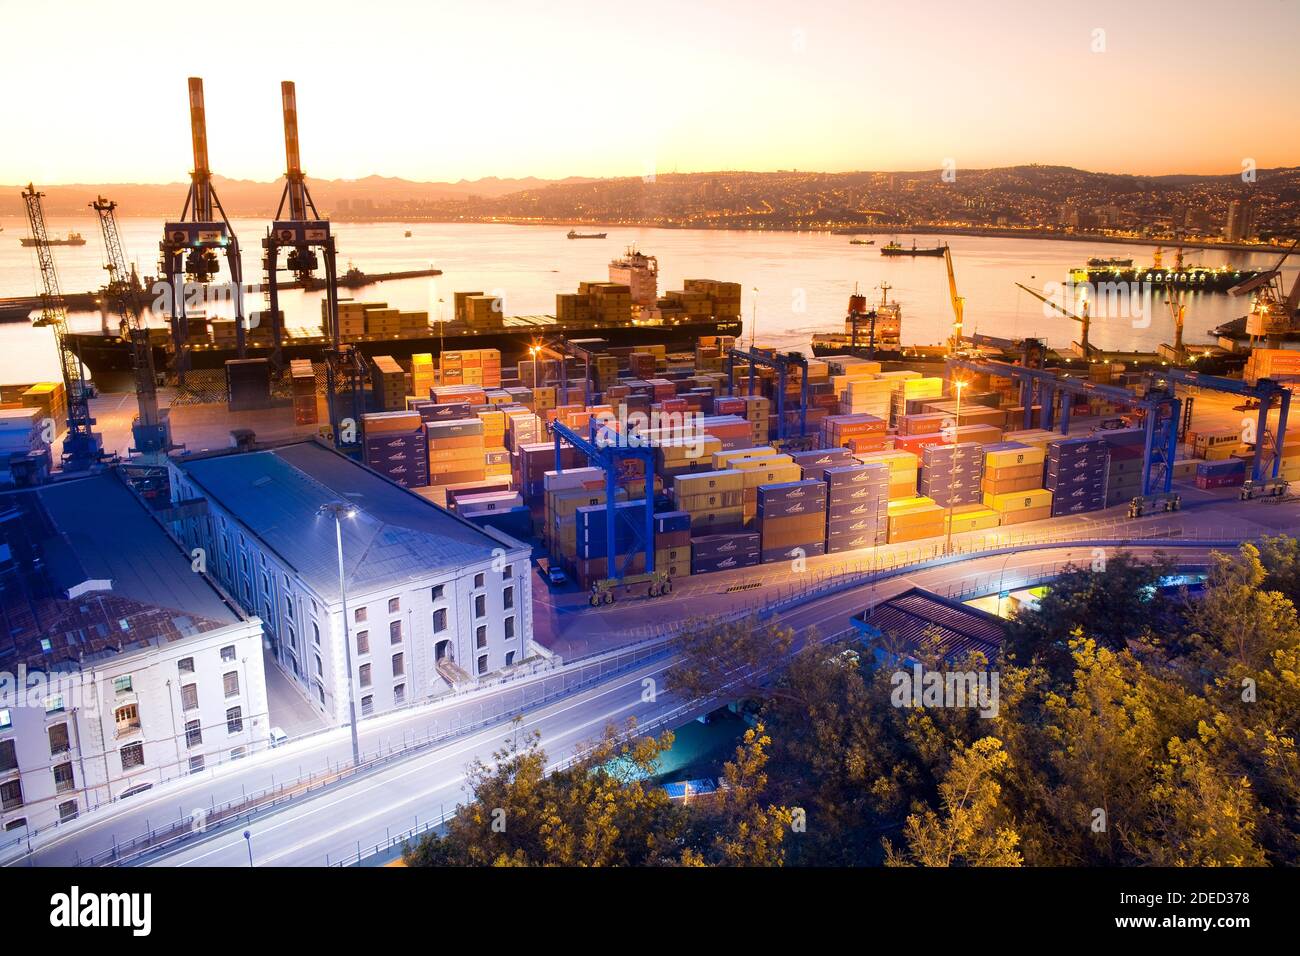 Valparaiso, Valparaiso region, Chile, South America - View of the port of Valparaiso facilities before sunrise. Stock Photo